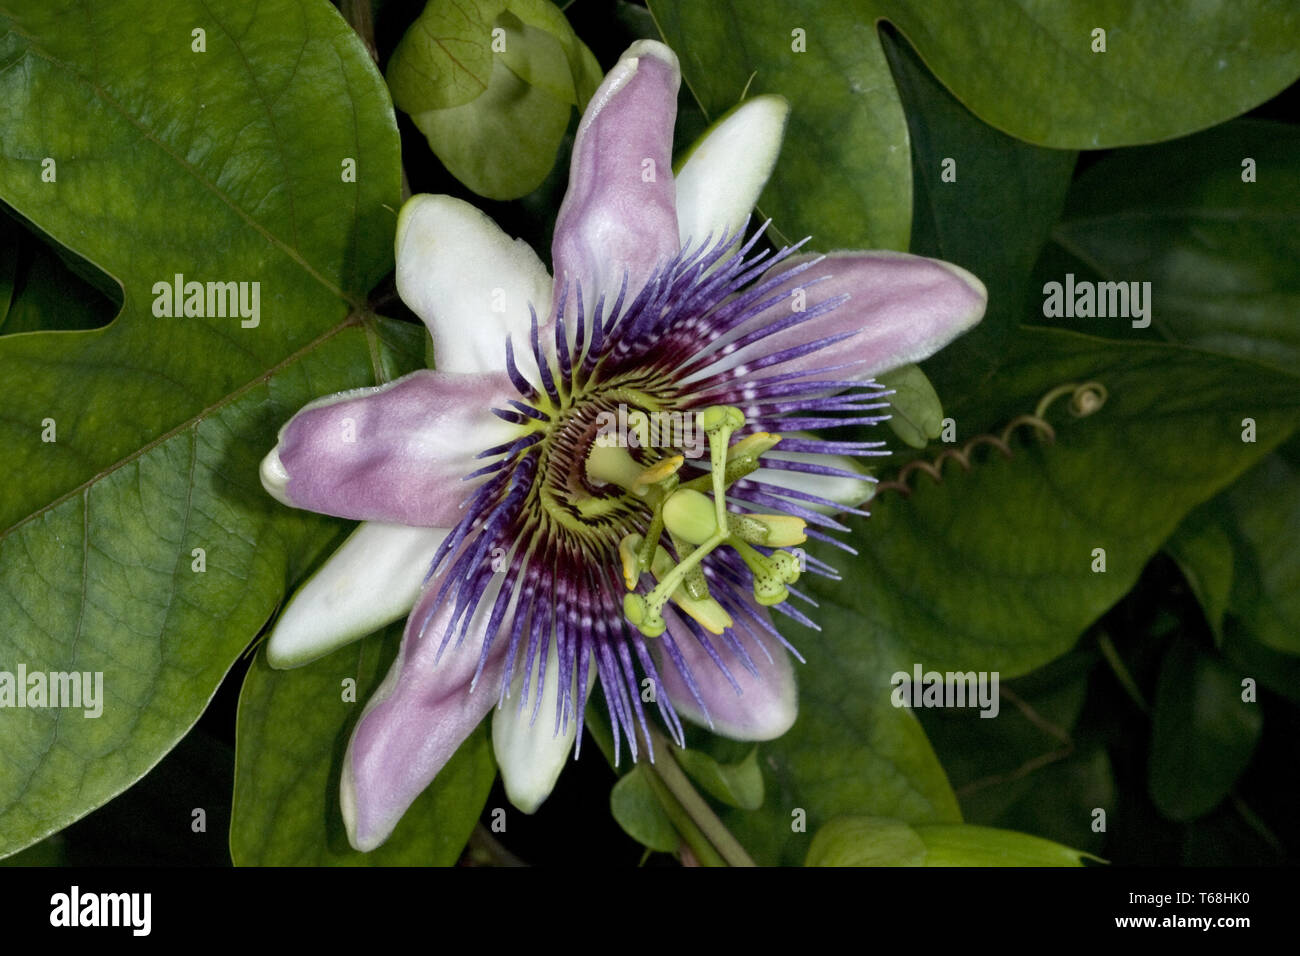 violet passion flower (Passiflora Violacea) Stock Photo